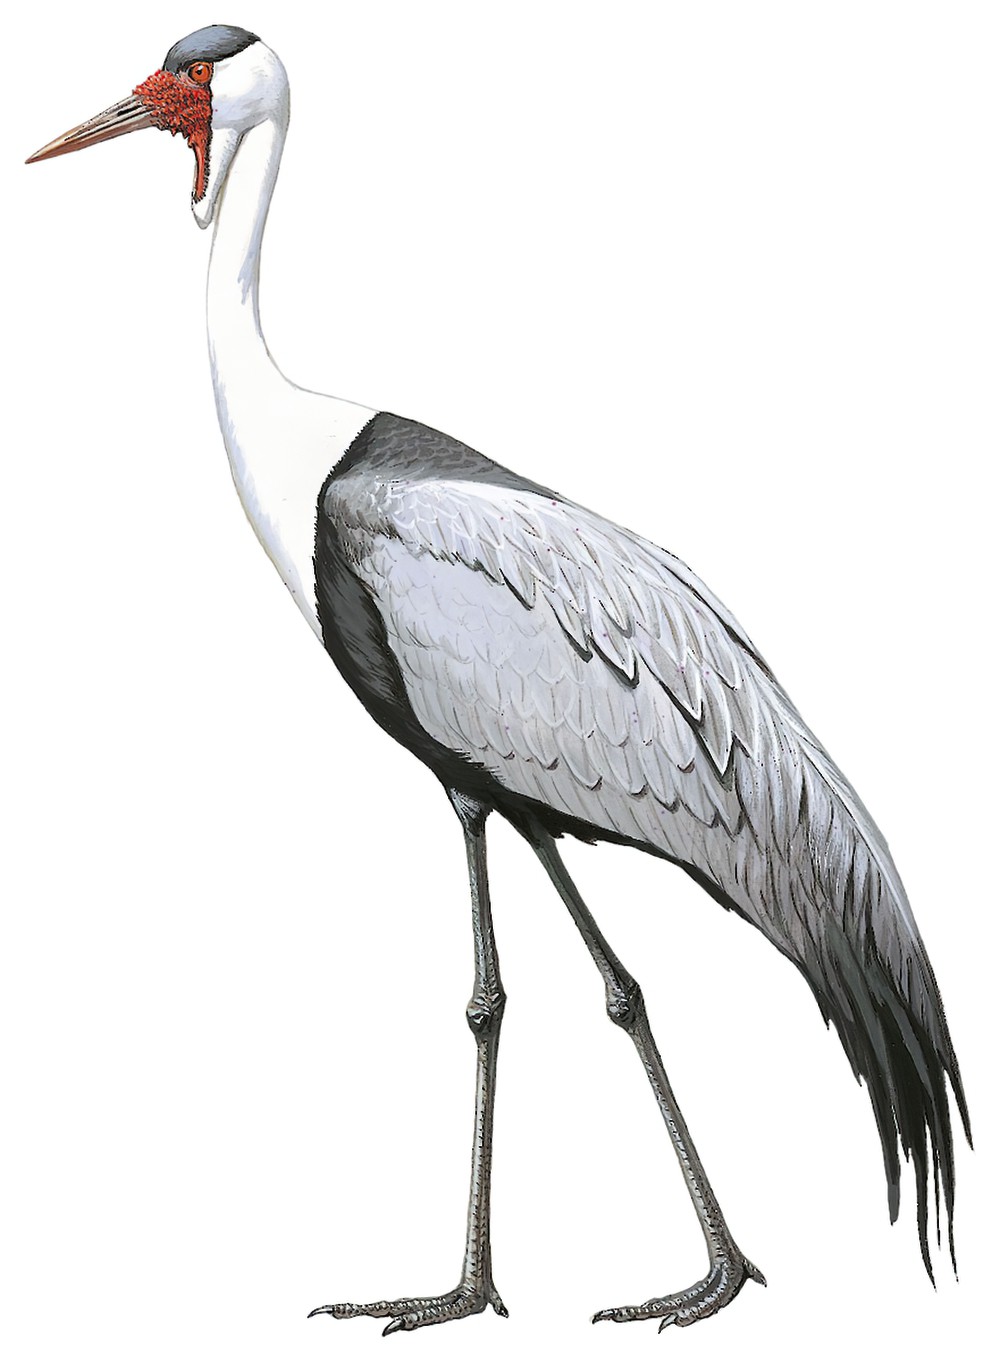 Wattled Crane / Bugeranus carunculatus